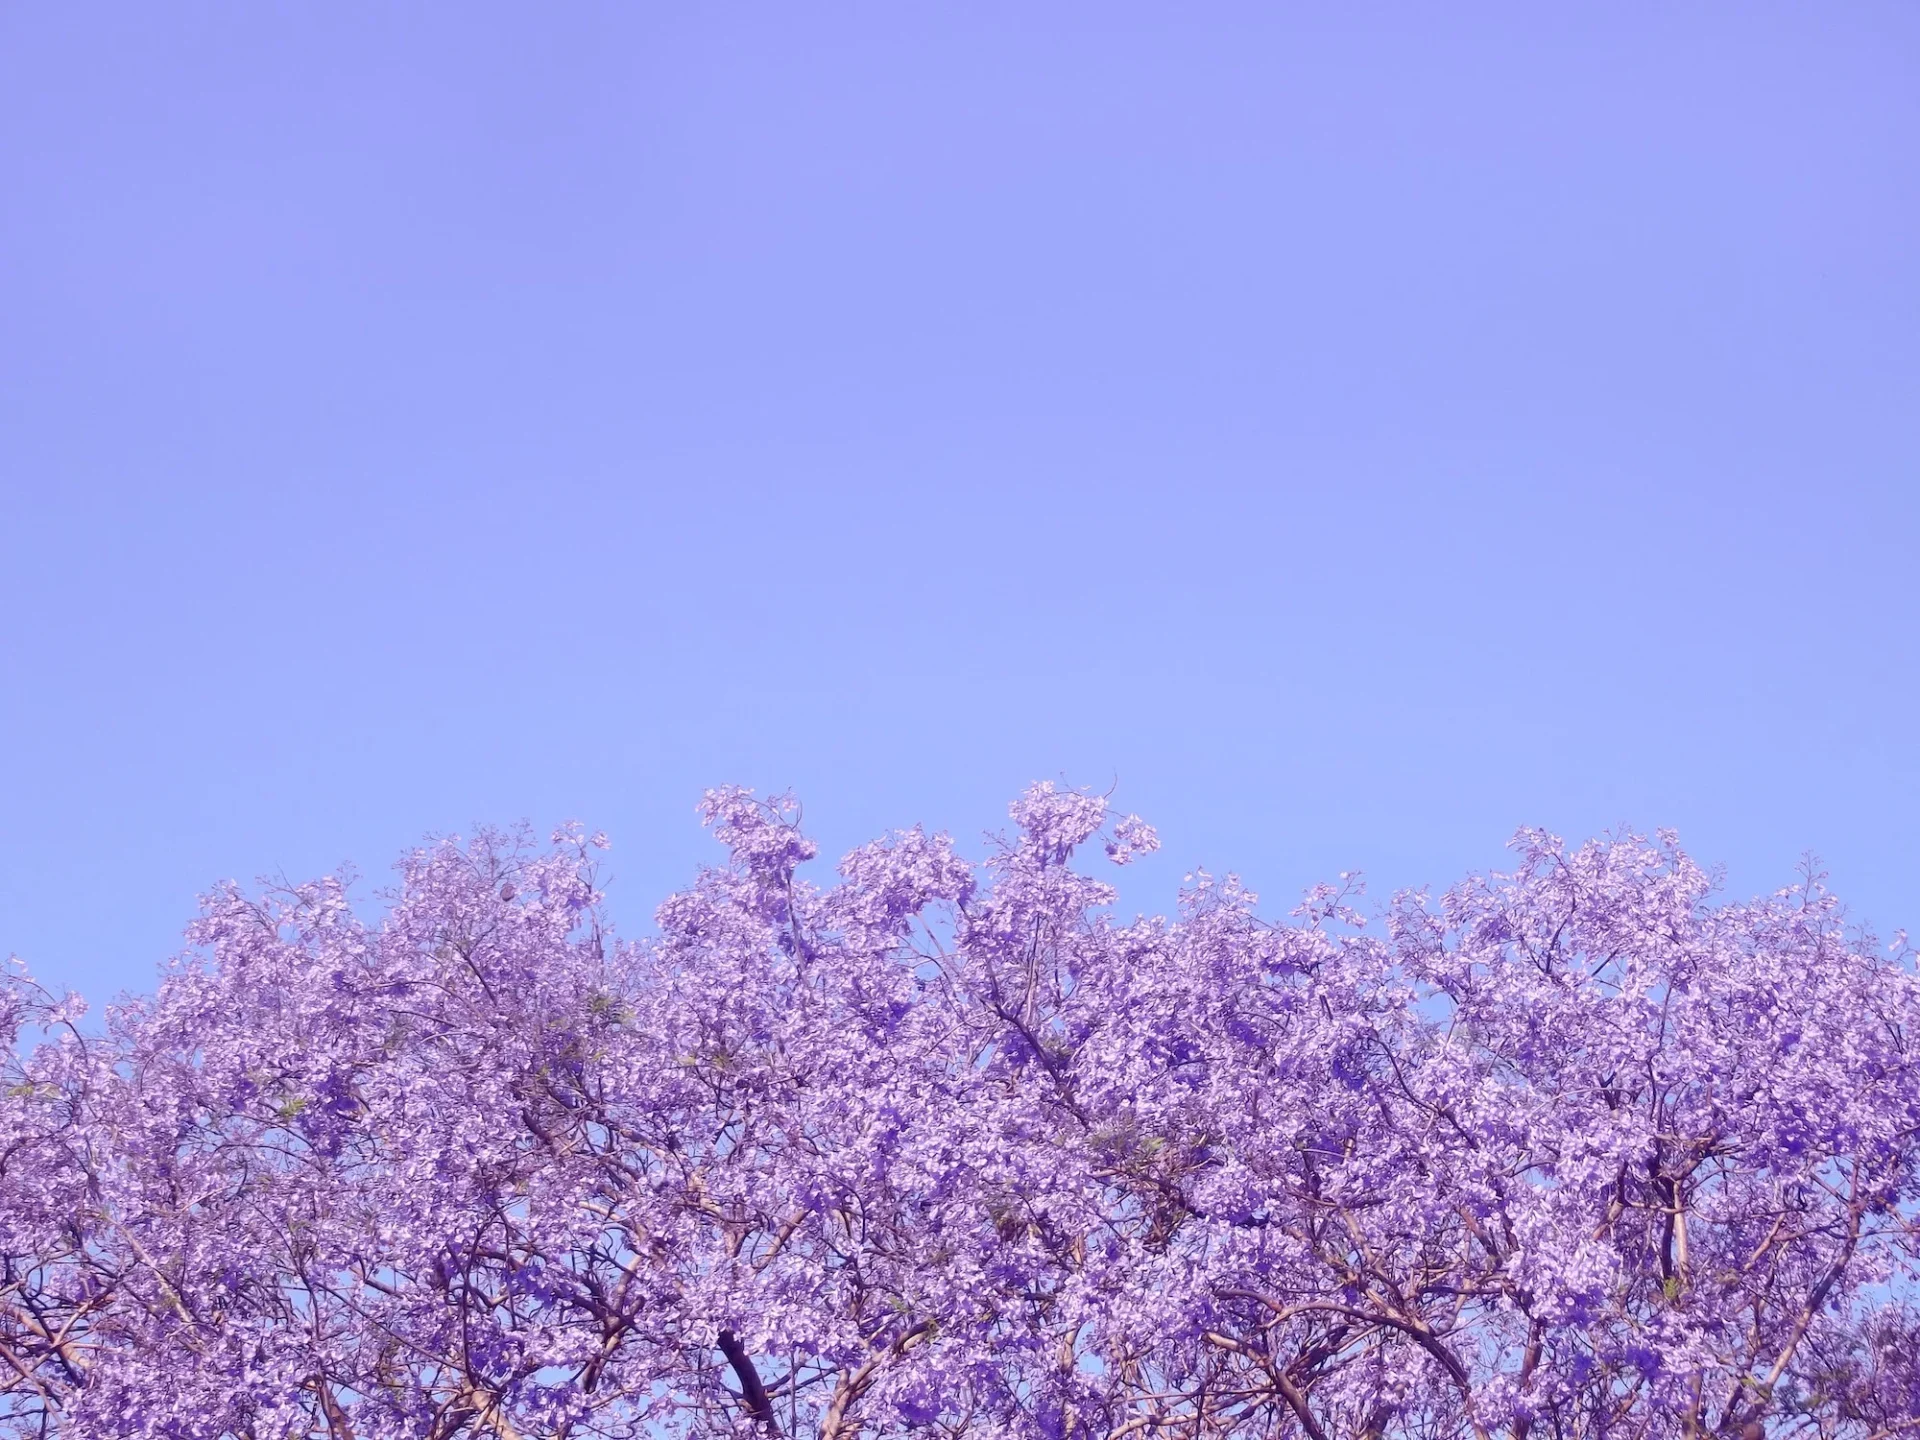 Purple Jacaranda tree against a blue sky